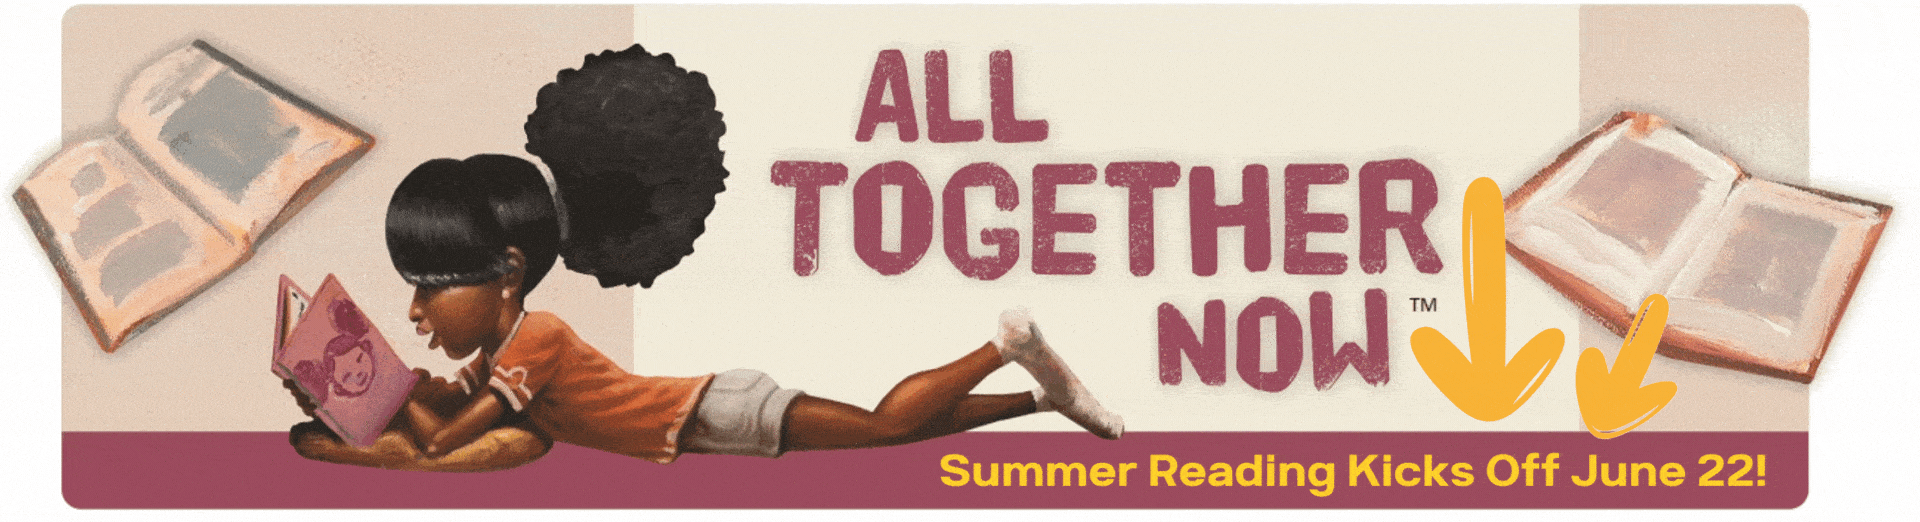 Slider Summer Reading Program Byron Bergen Public Library 